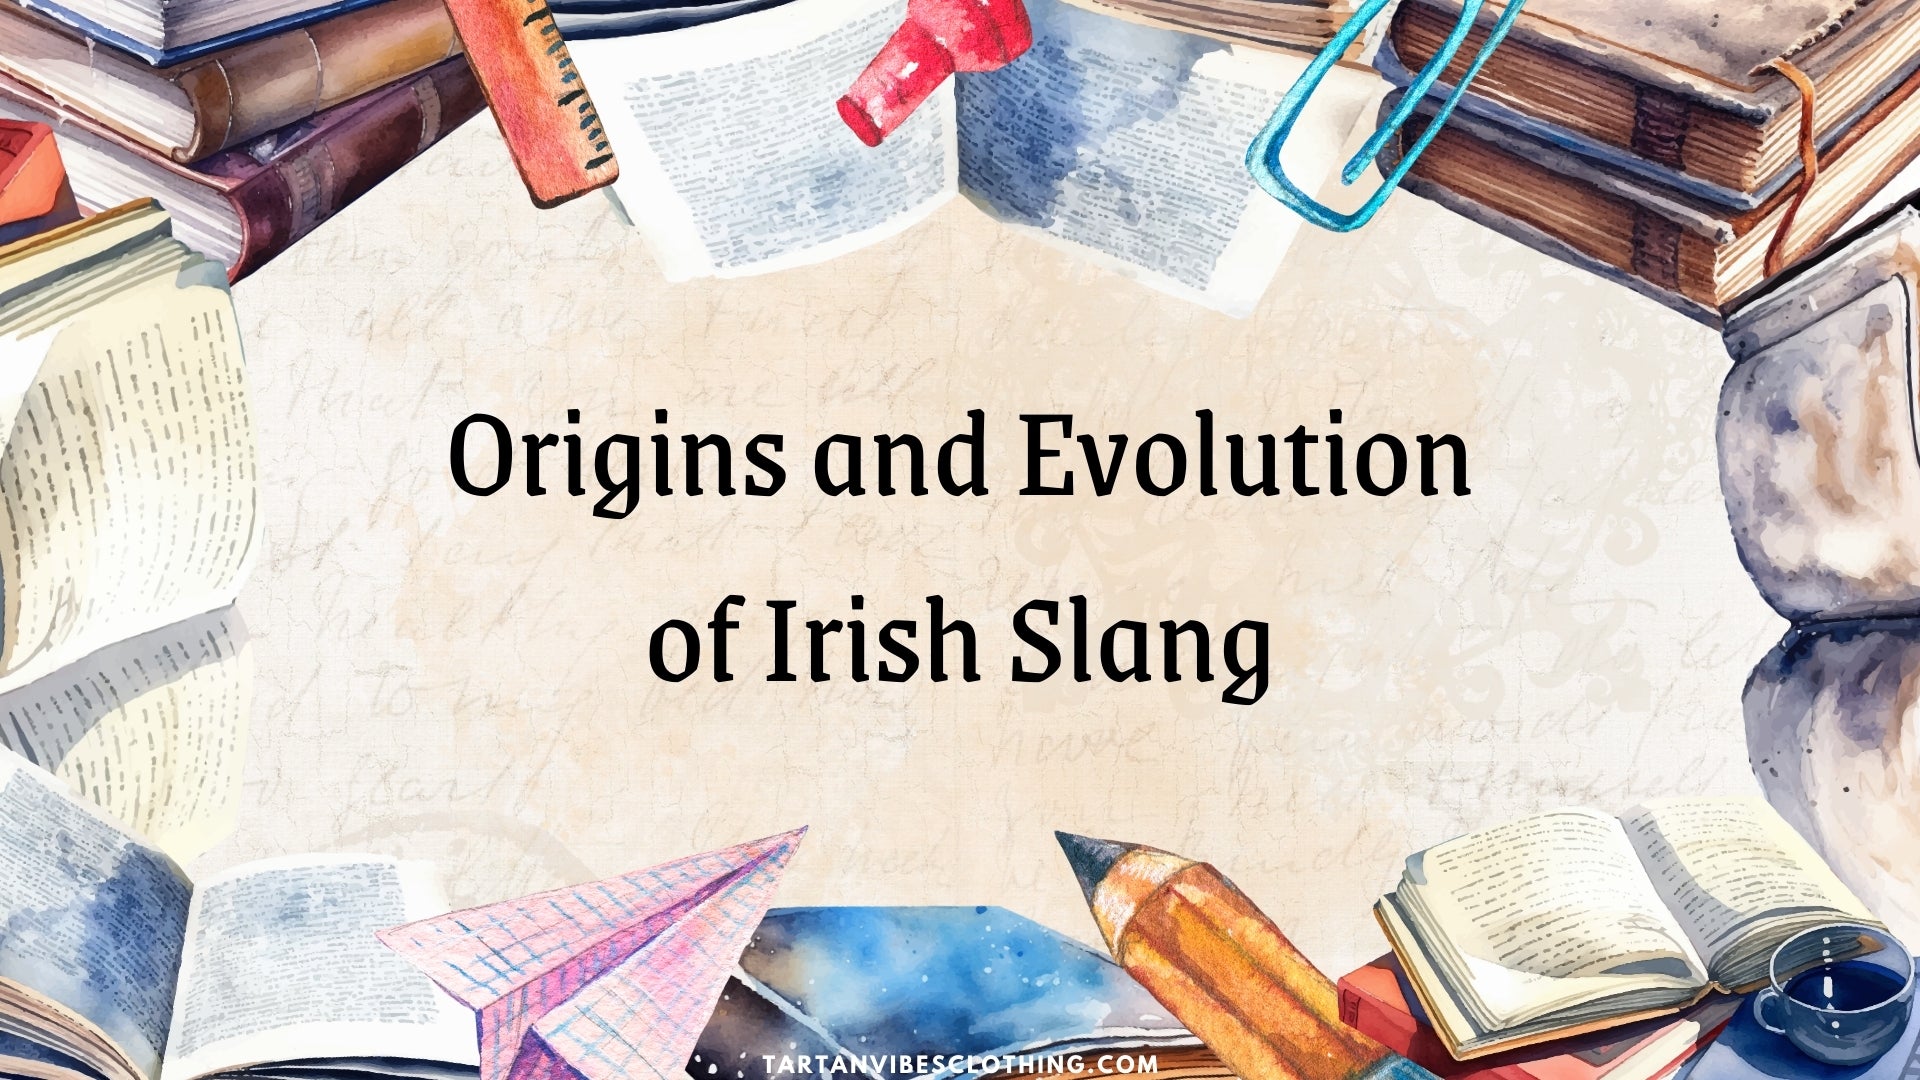 Origins and Evolution of Irish Slang